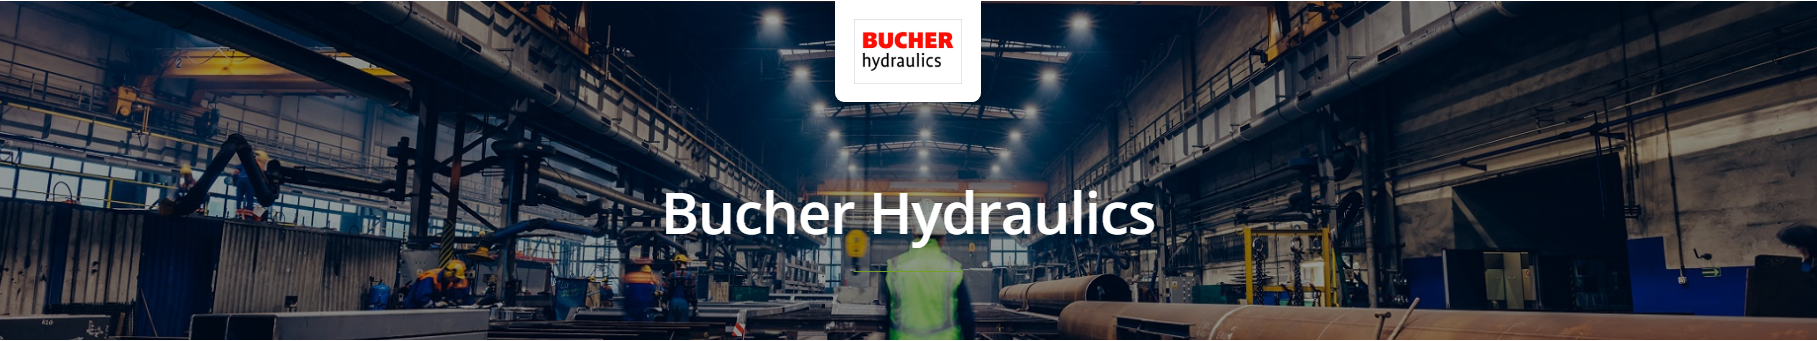 Bucher Hydraulics Pumps